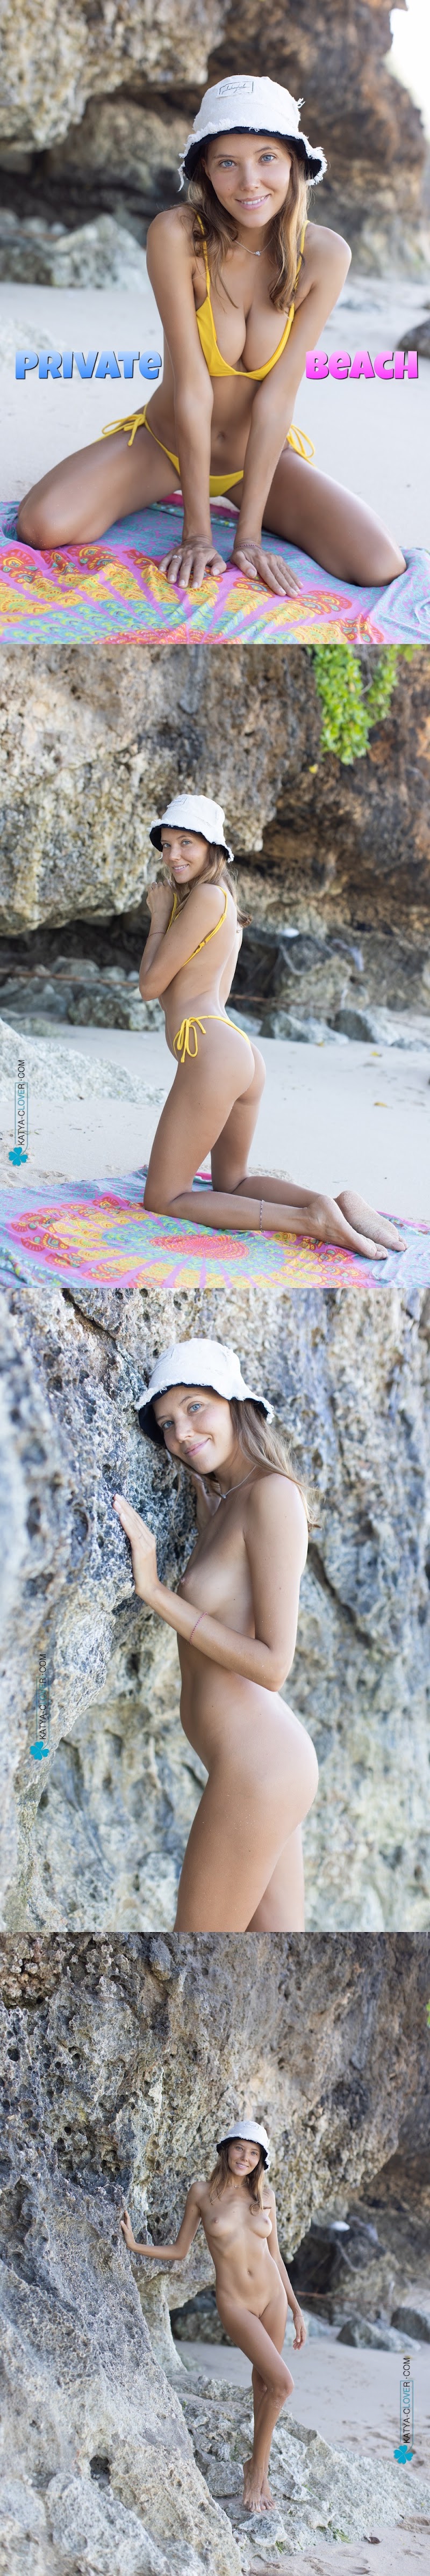 [KatyaClover.Com] Katya Clover - Private Beach